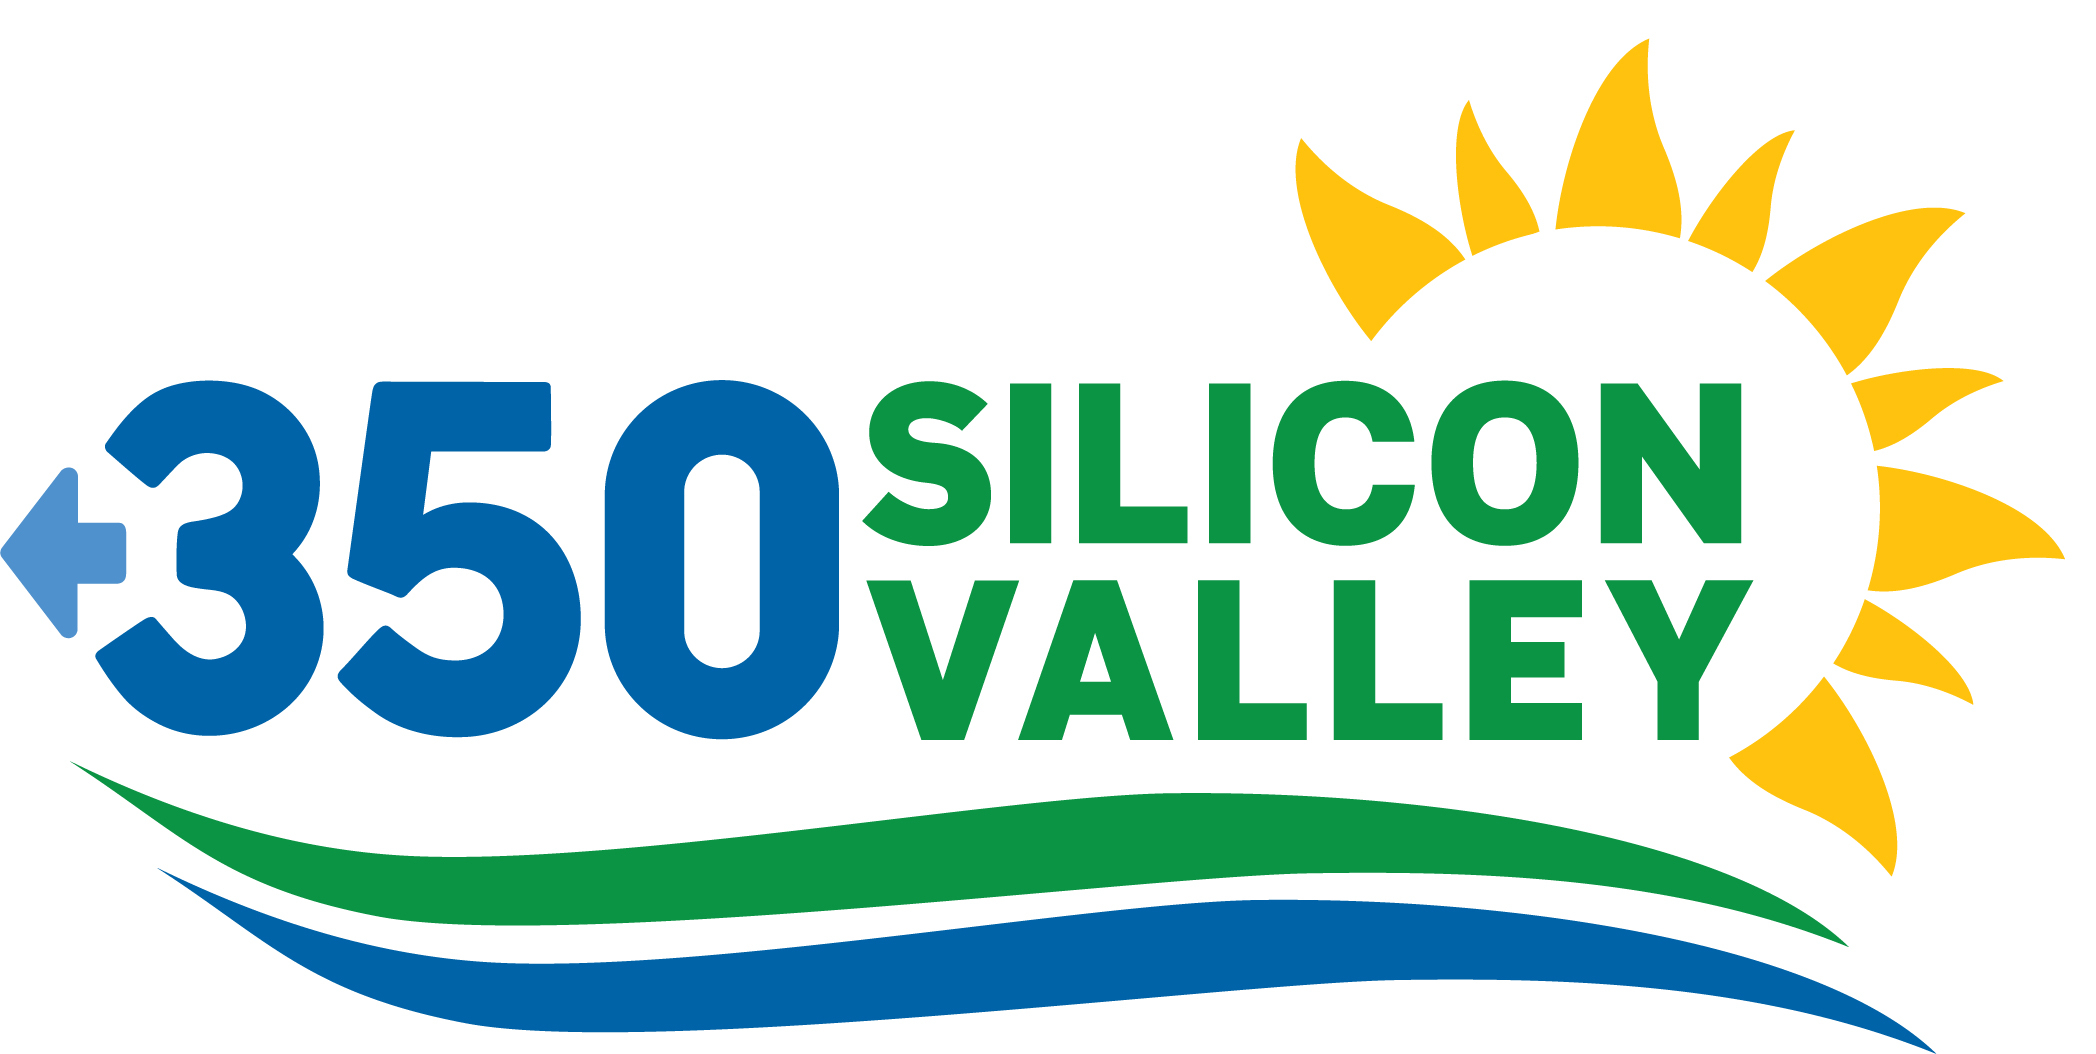 350 Silicon Valley